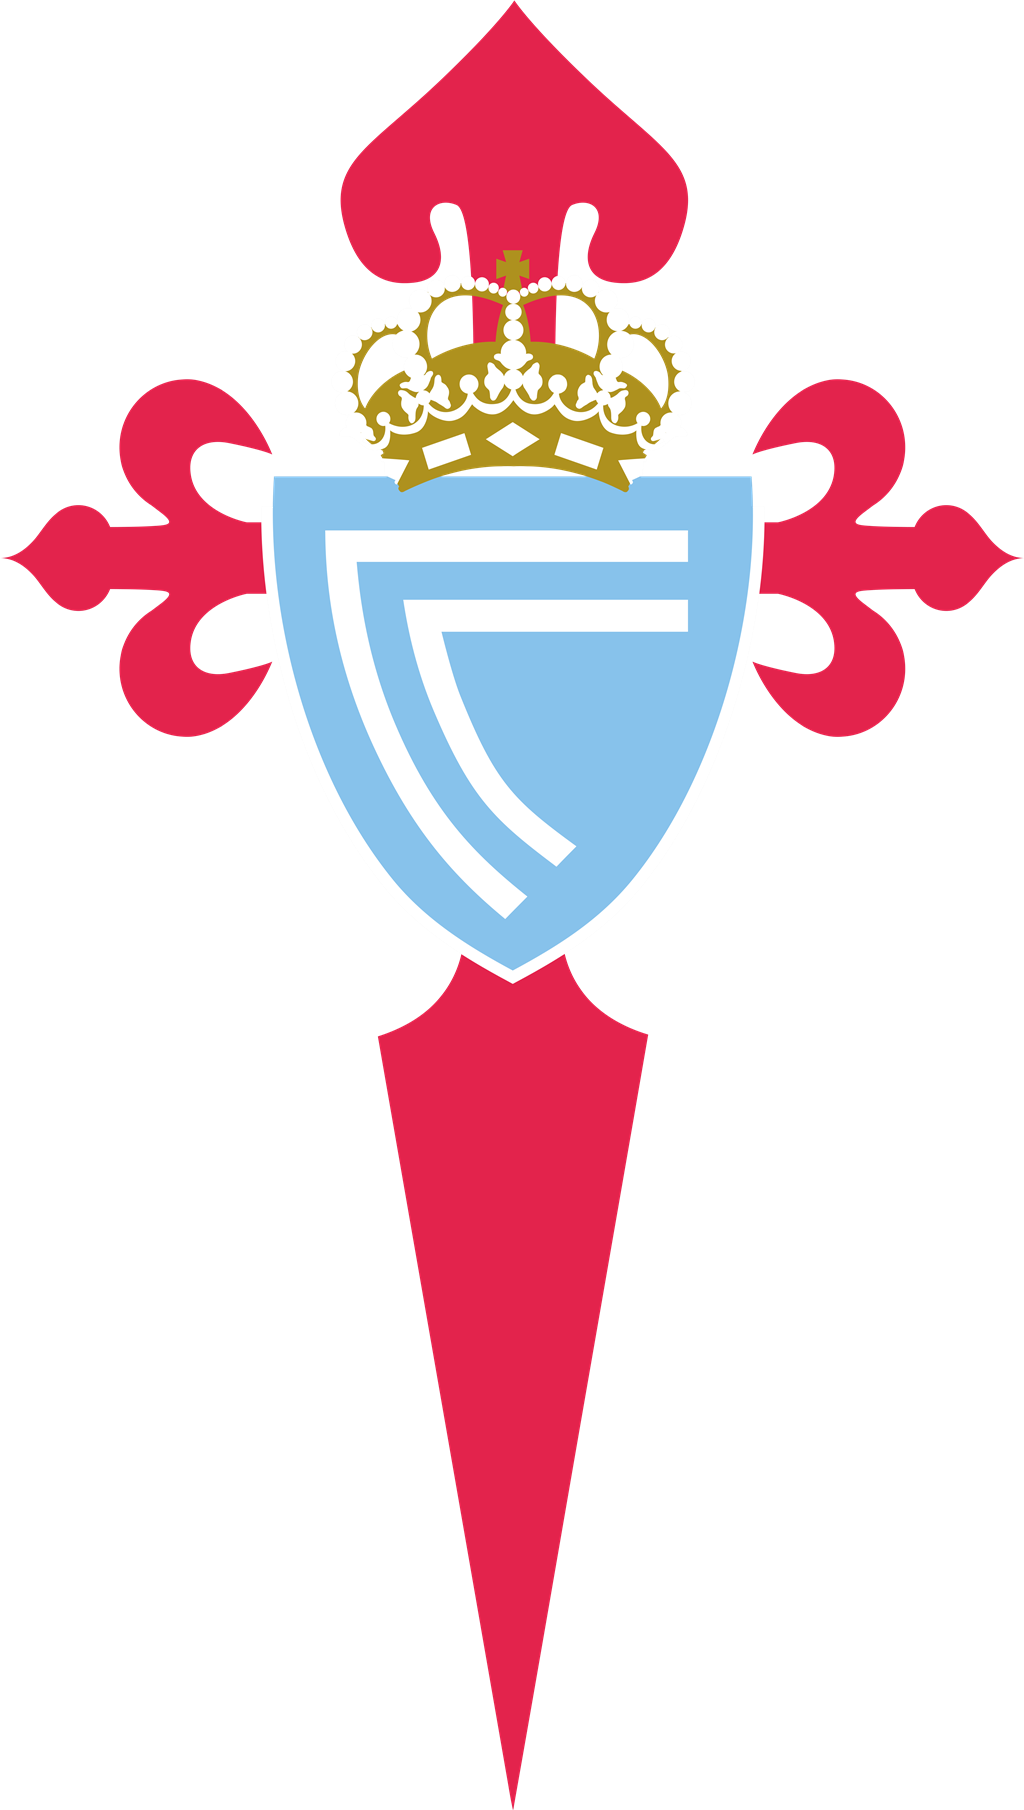 Celta de Vigo logotype, transparent .png, medium, large